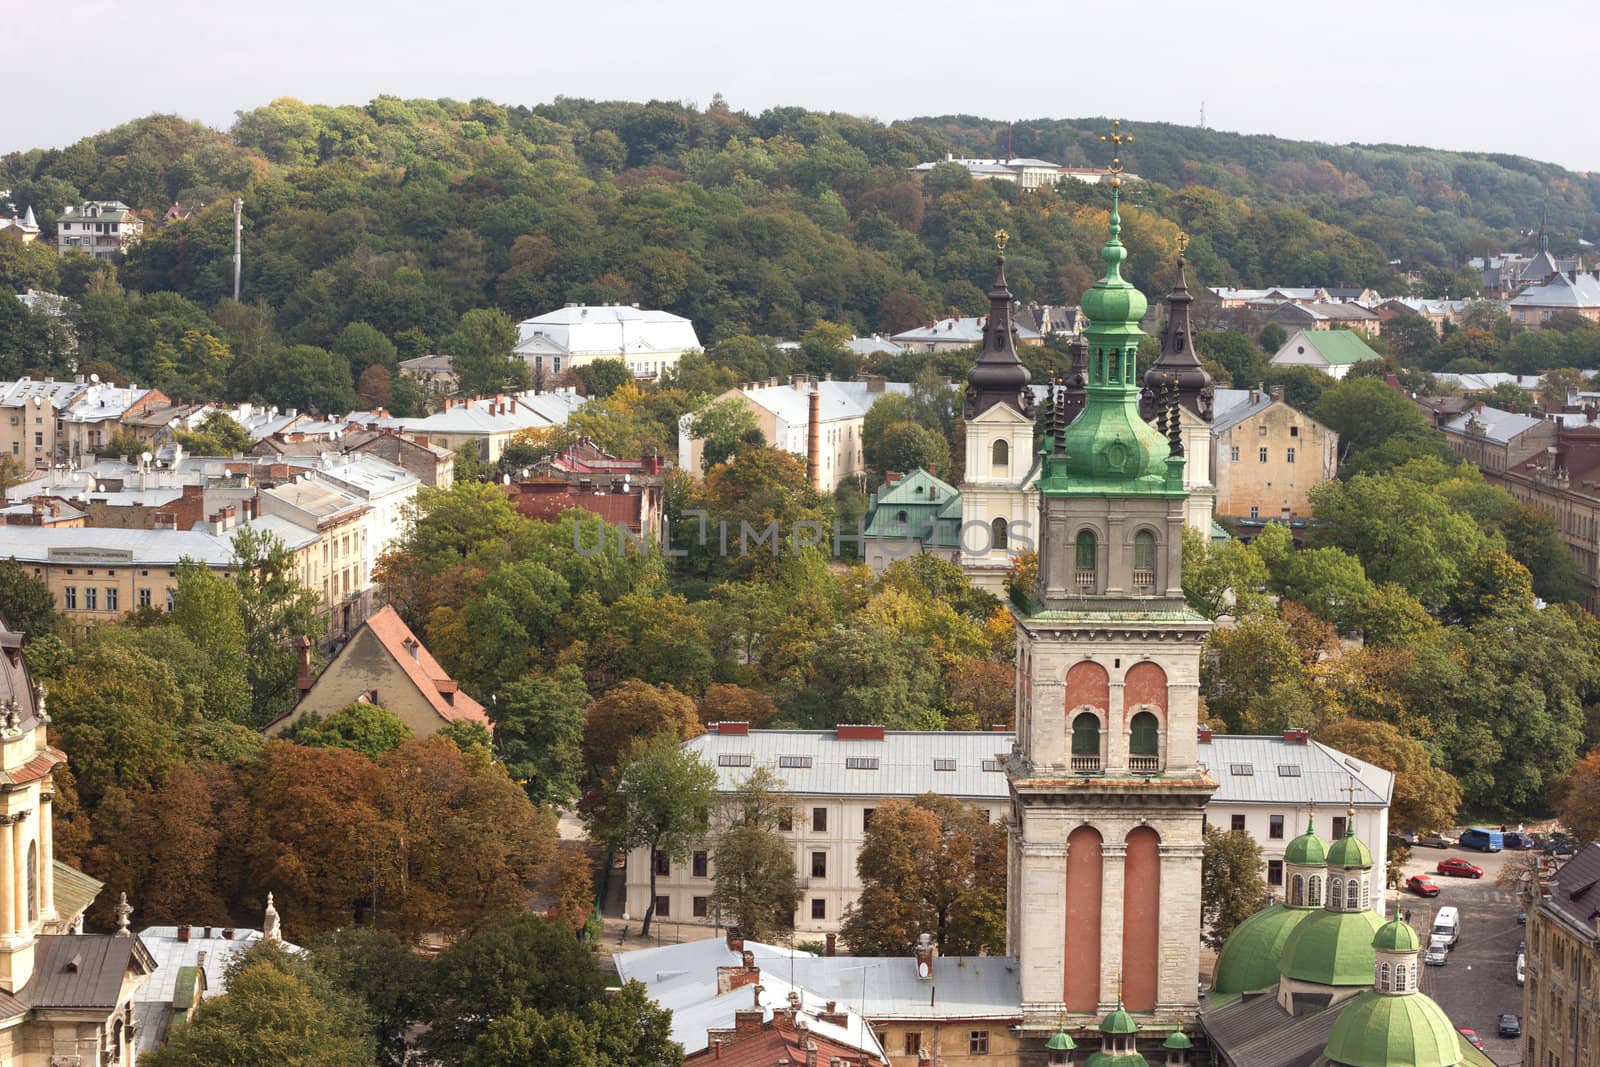 Historical center of Lviv by victosha